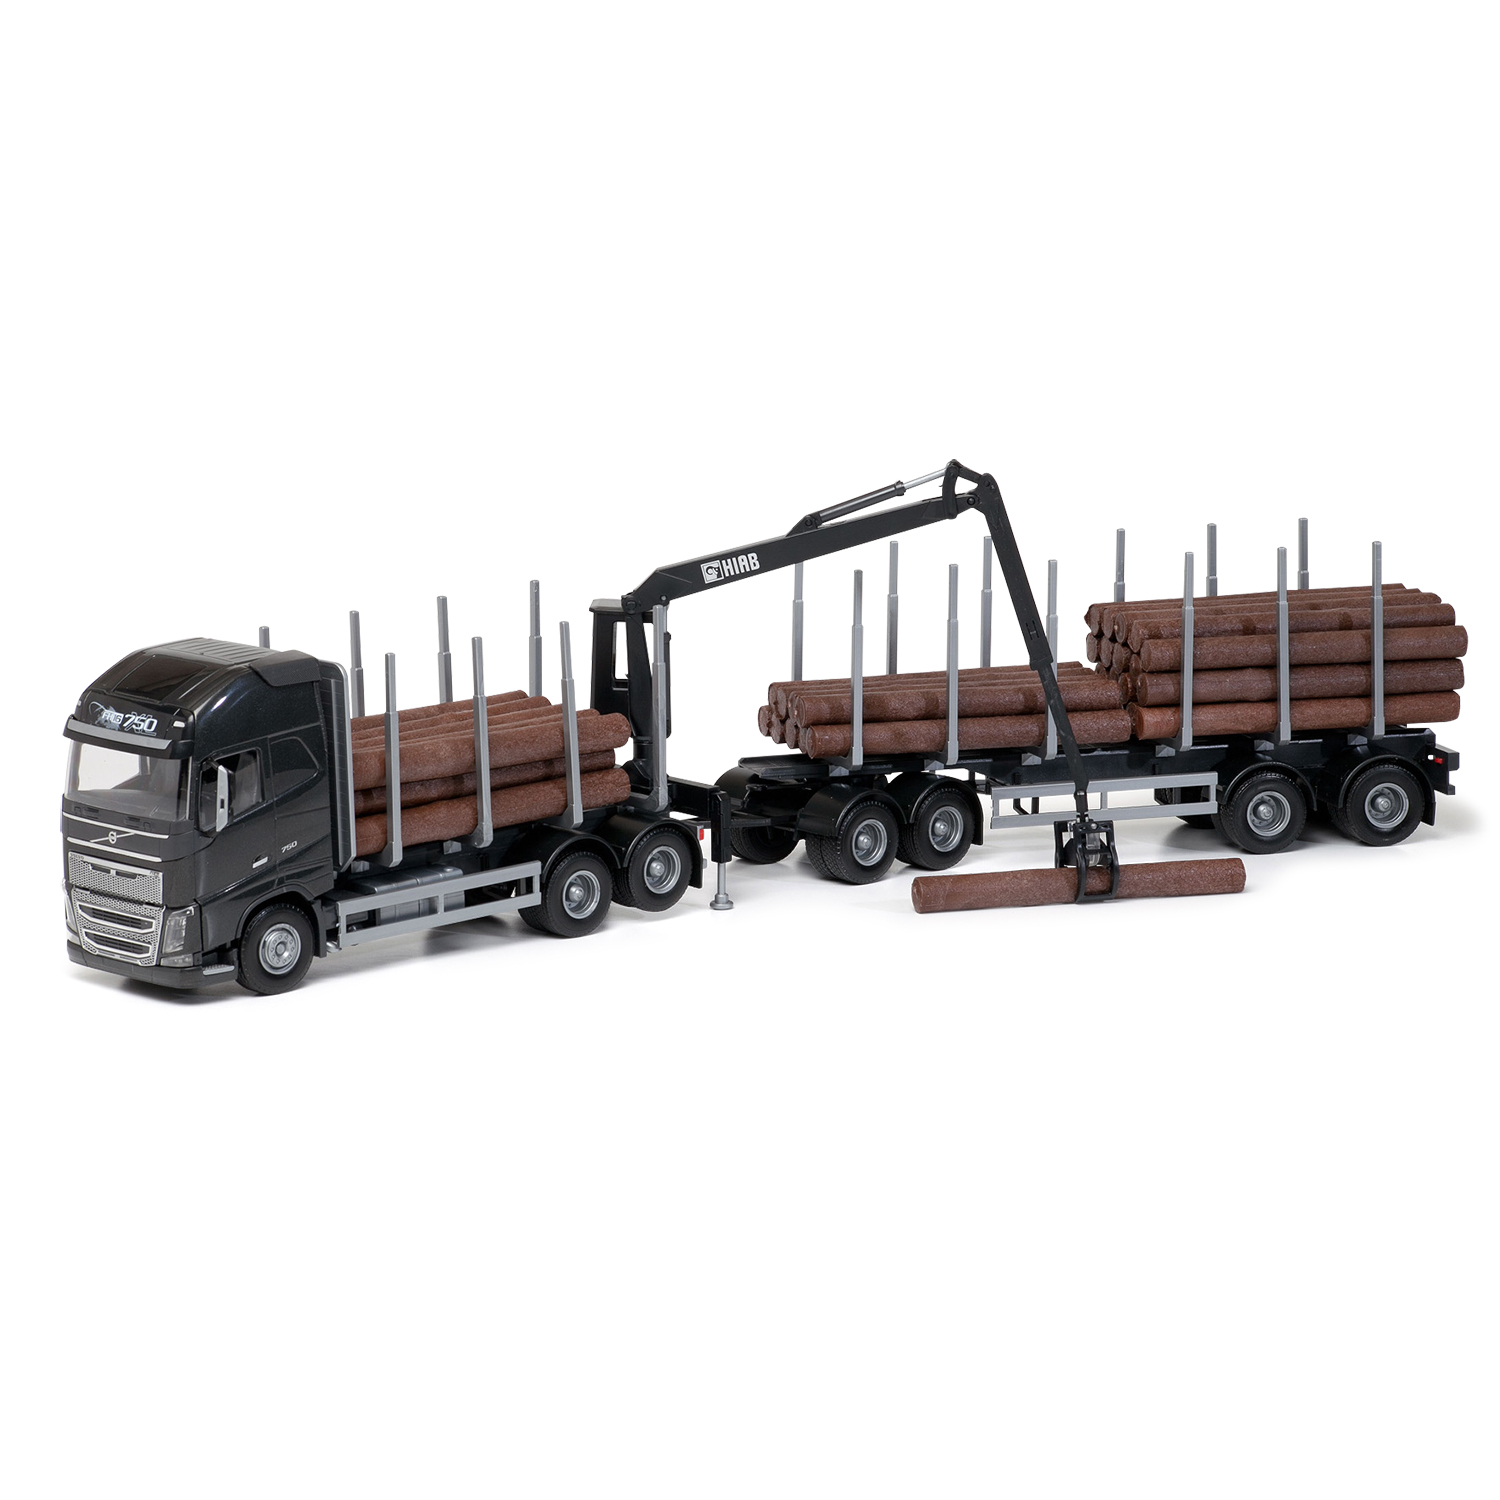 Toy trucks emek toy car timber truck volvo fh16/750 black 1:25